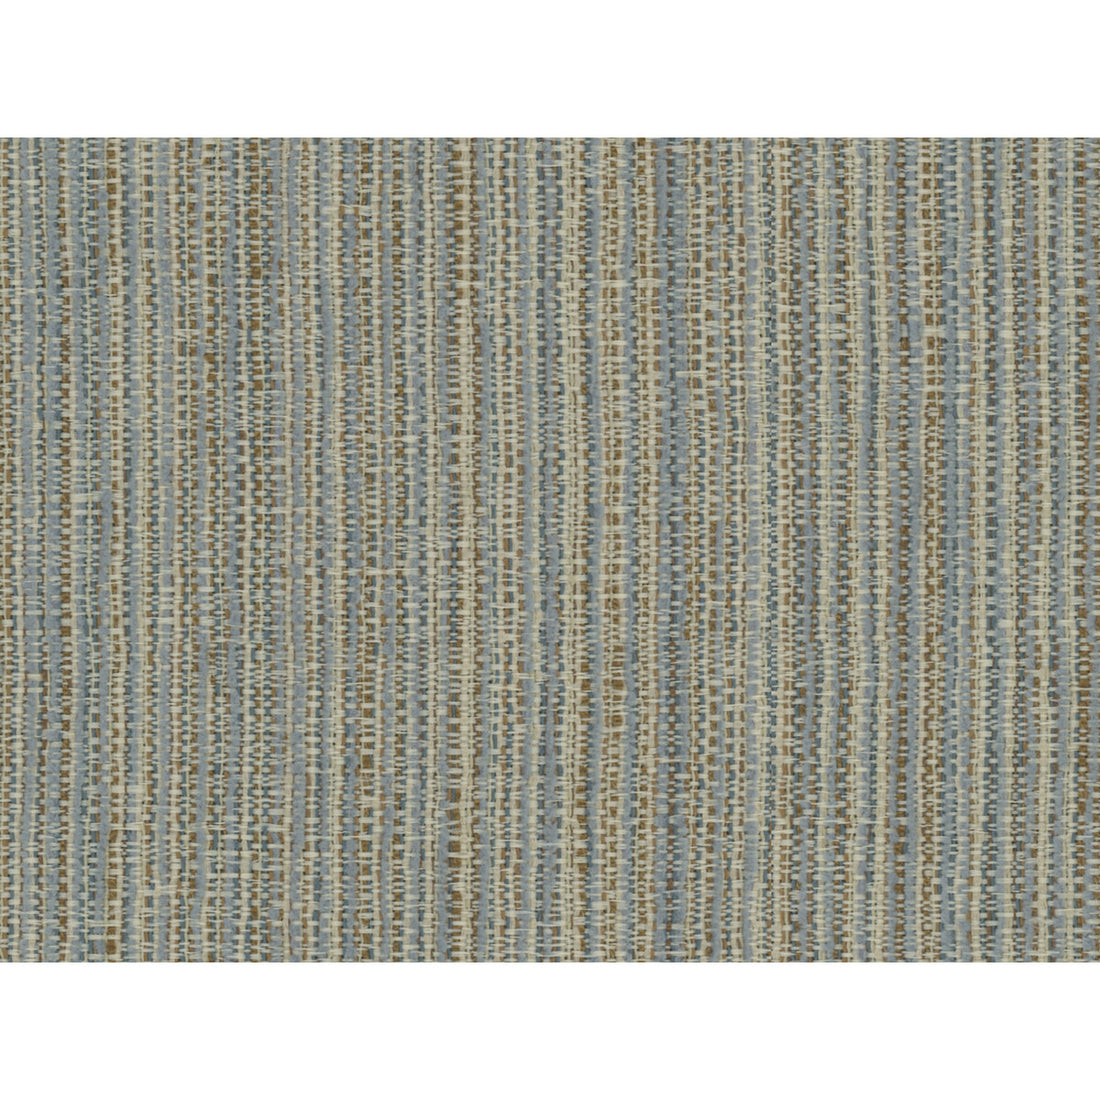 Kravet Smart fabric in 34474-615 color - pattern 34474.615.0 - by Kravet Smart